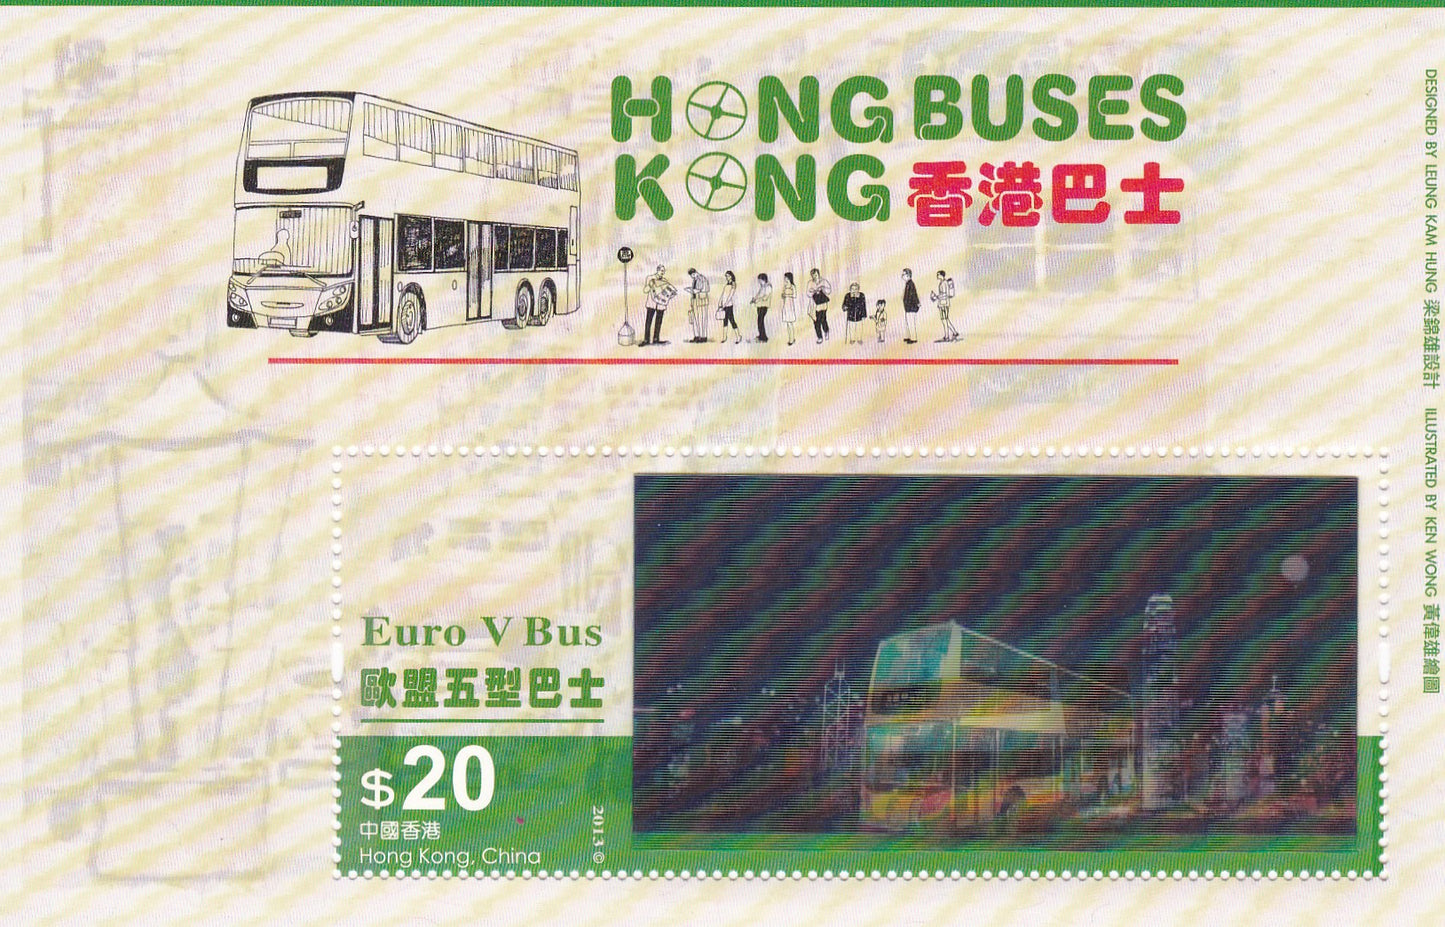 Hongkong  bus pictures 3D ms